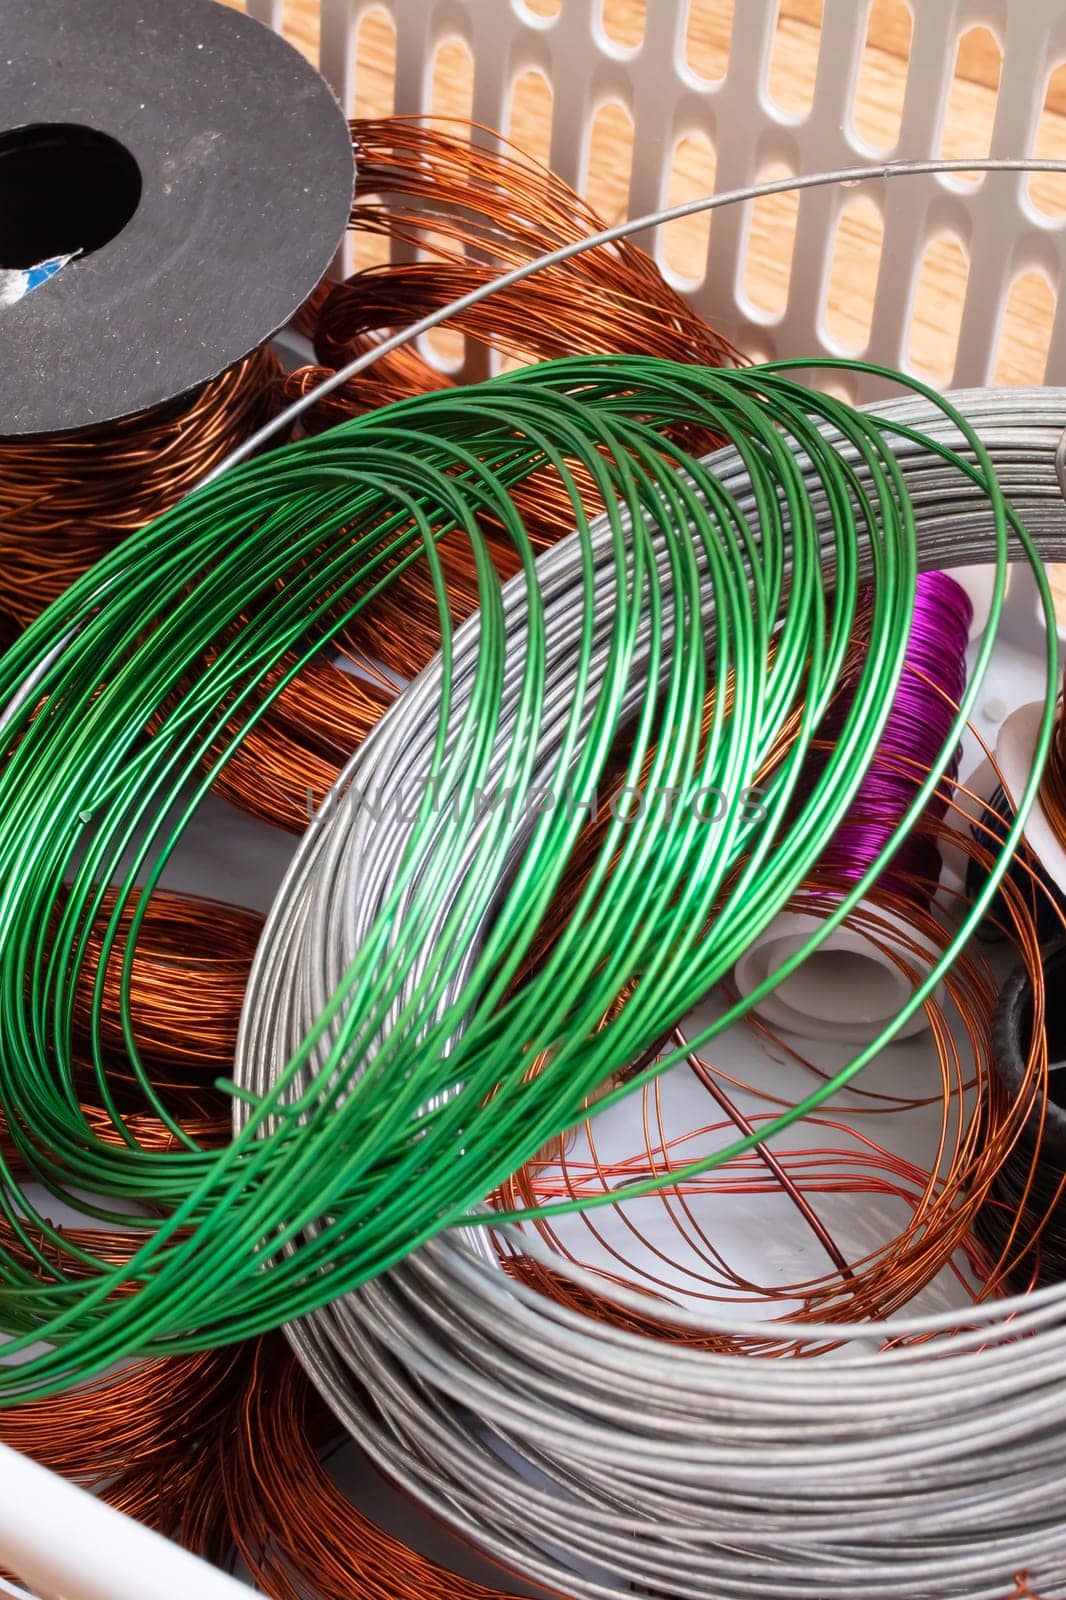 Copper wire coils in a plastic basket close up